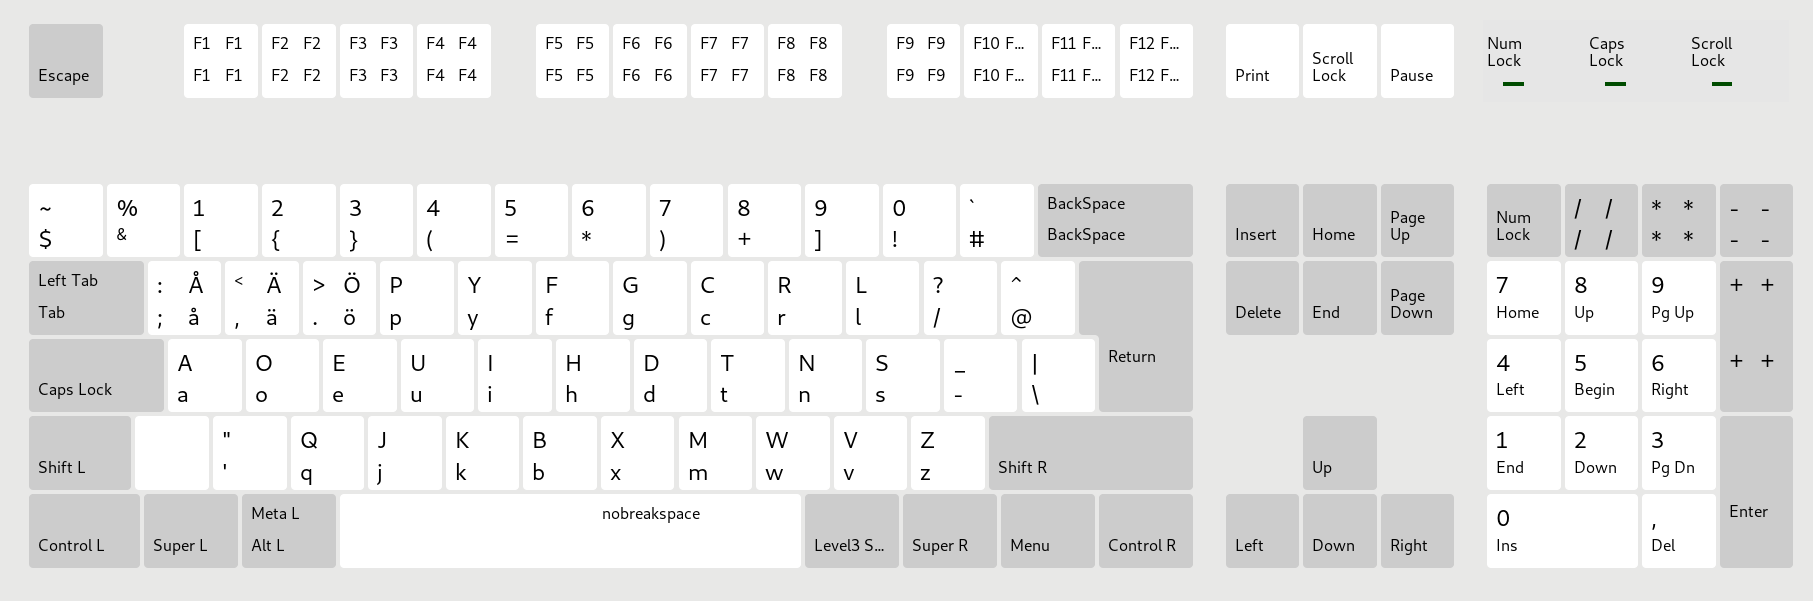 GitHub - tru/blowrak_programmer: The blowrak programmer layout